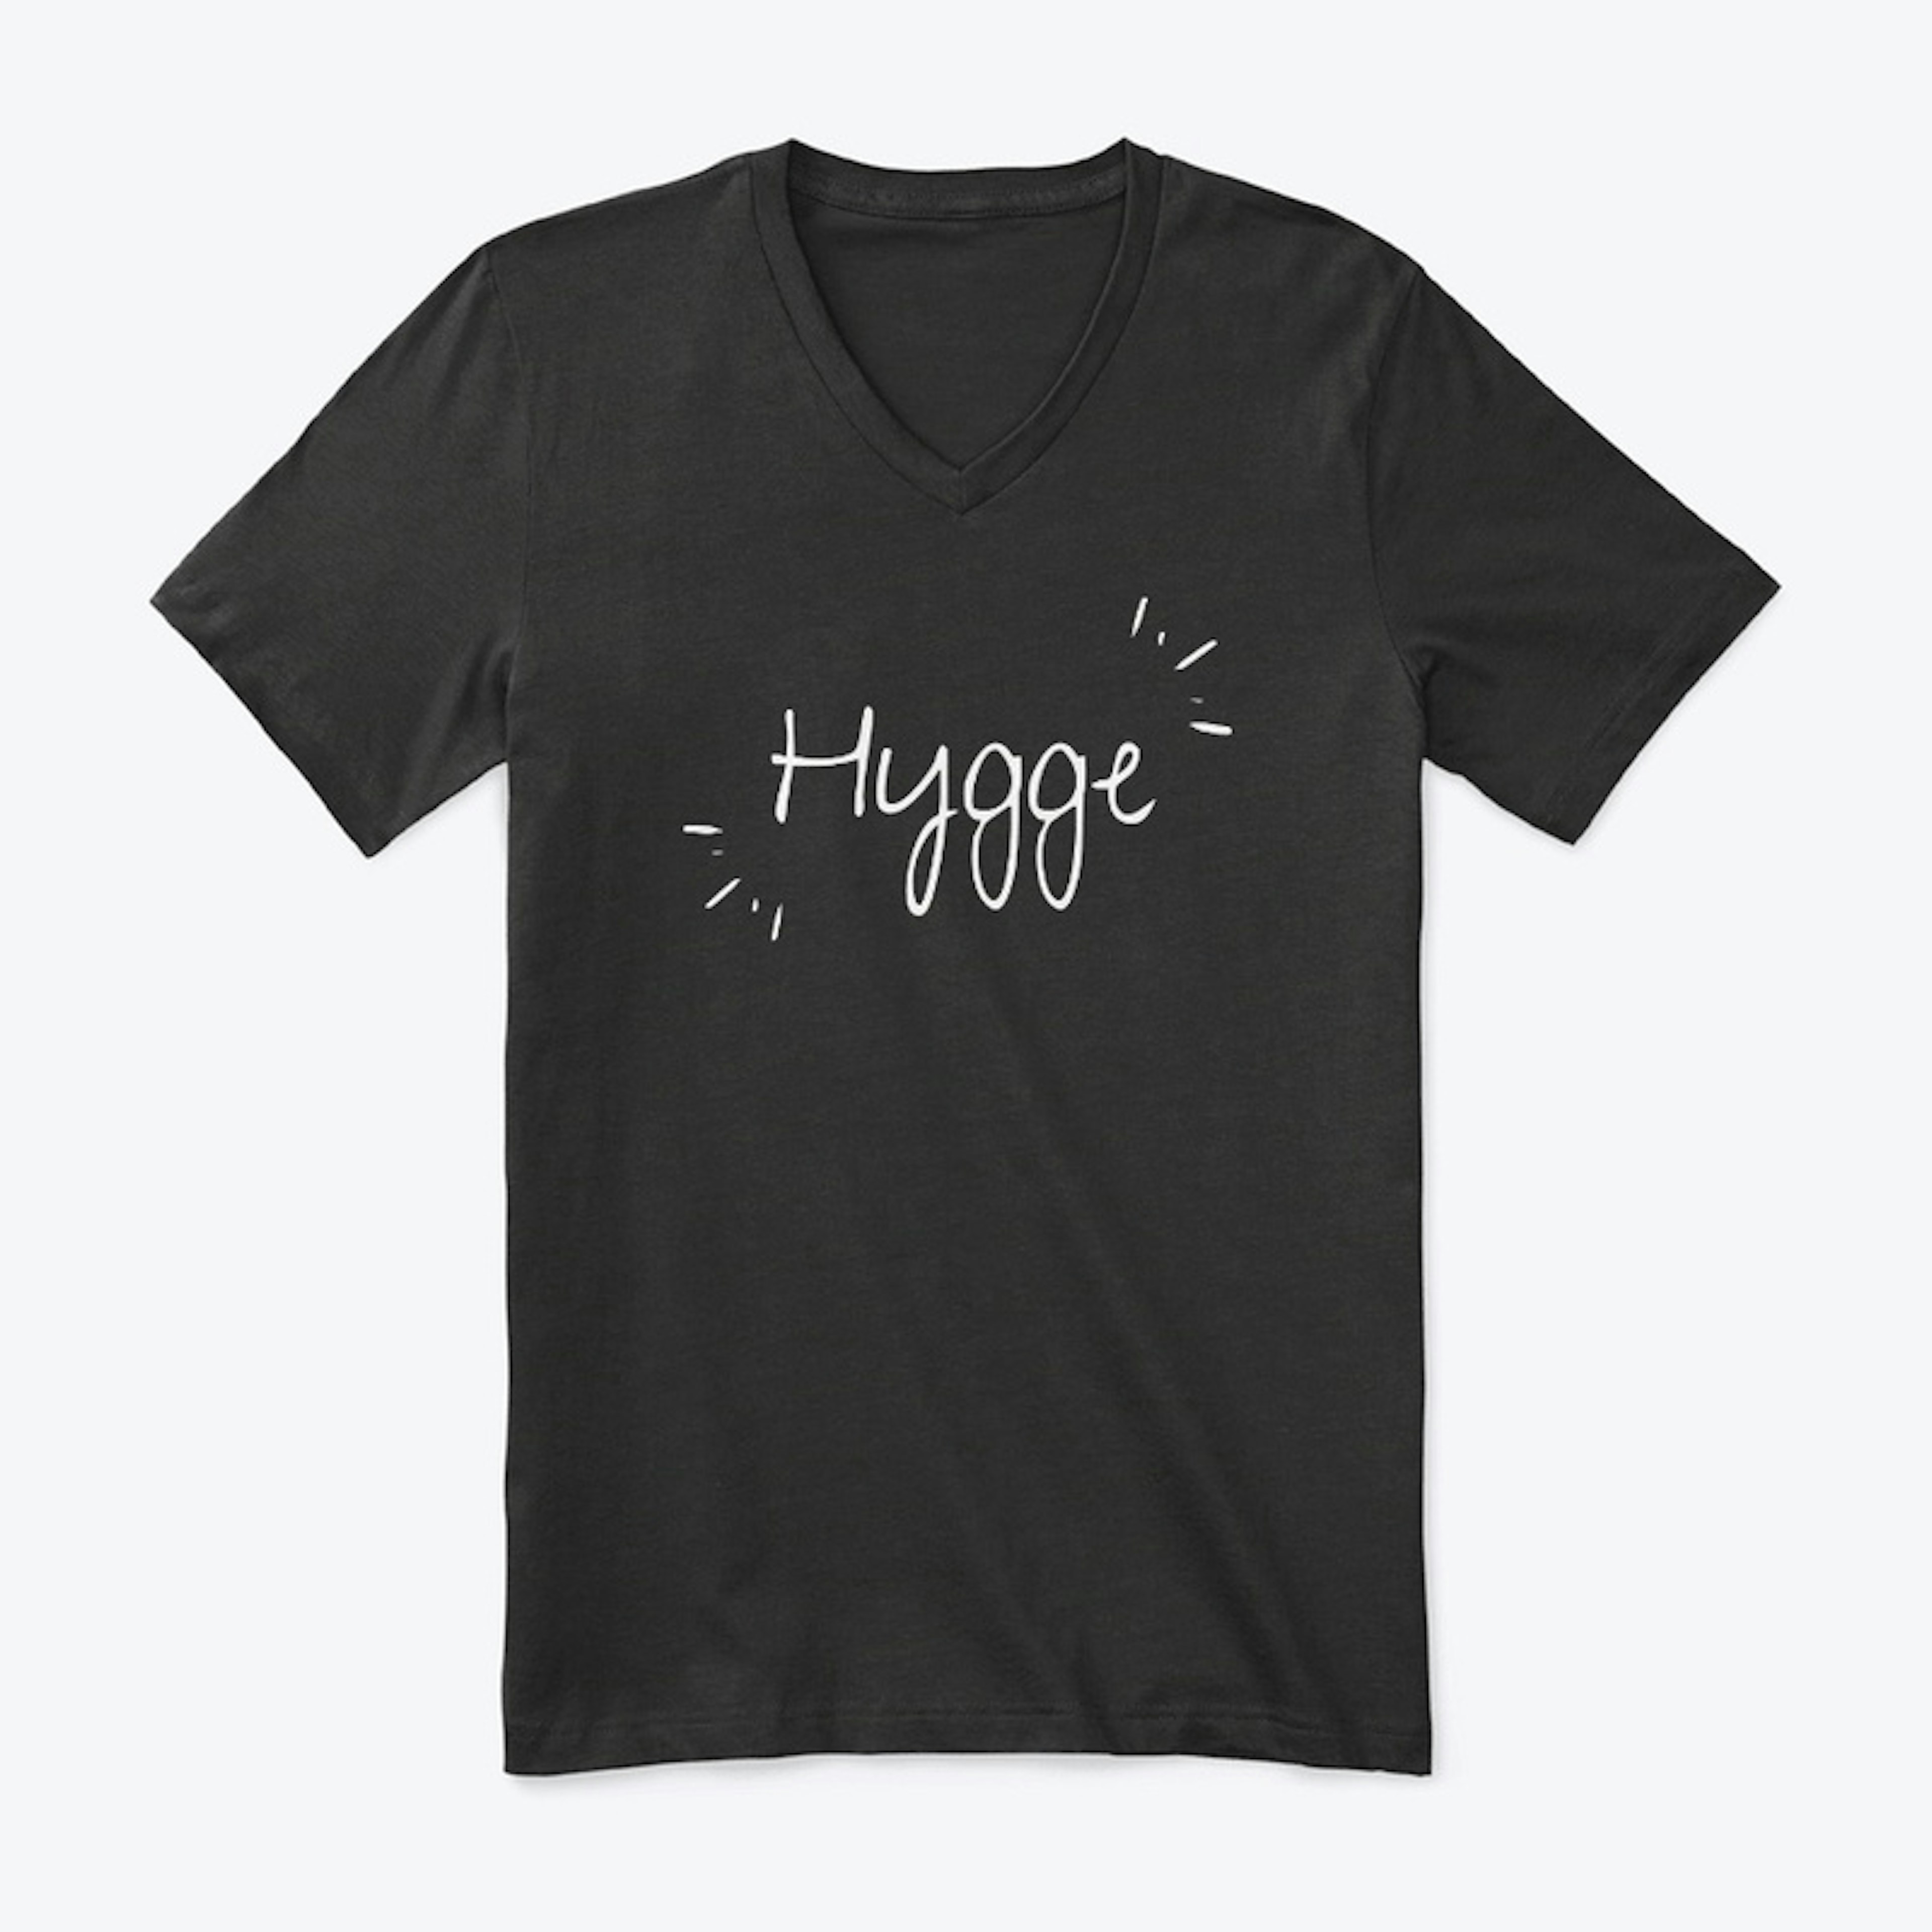 Hygge t-shirt